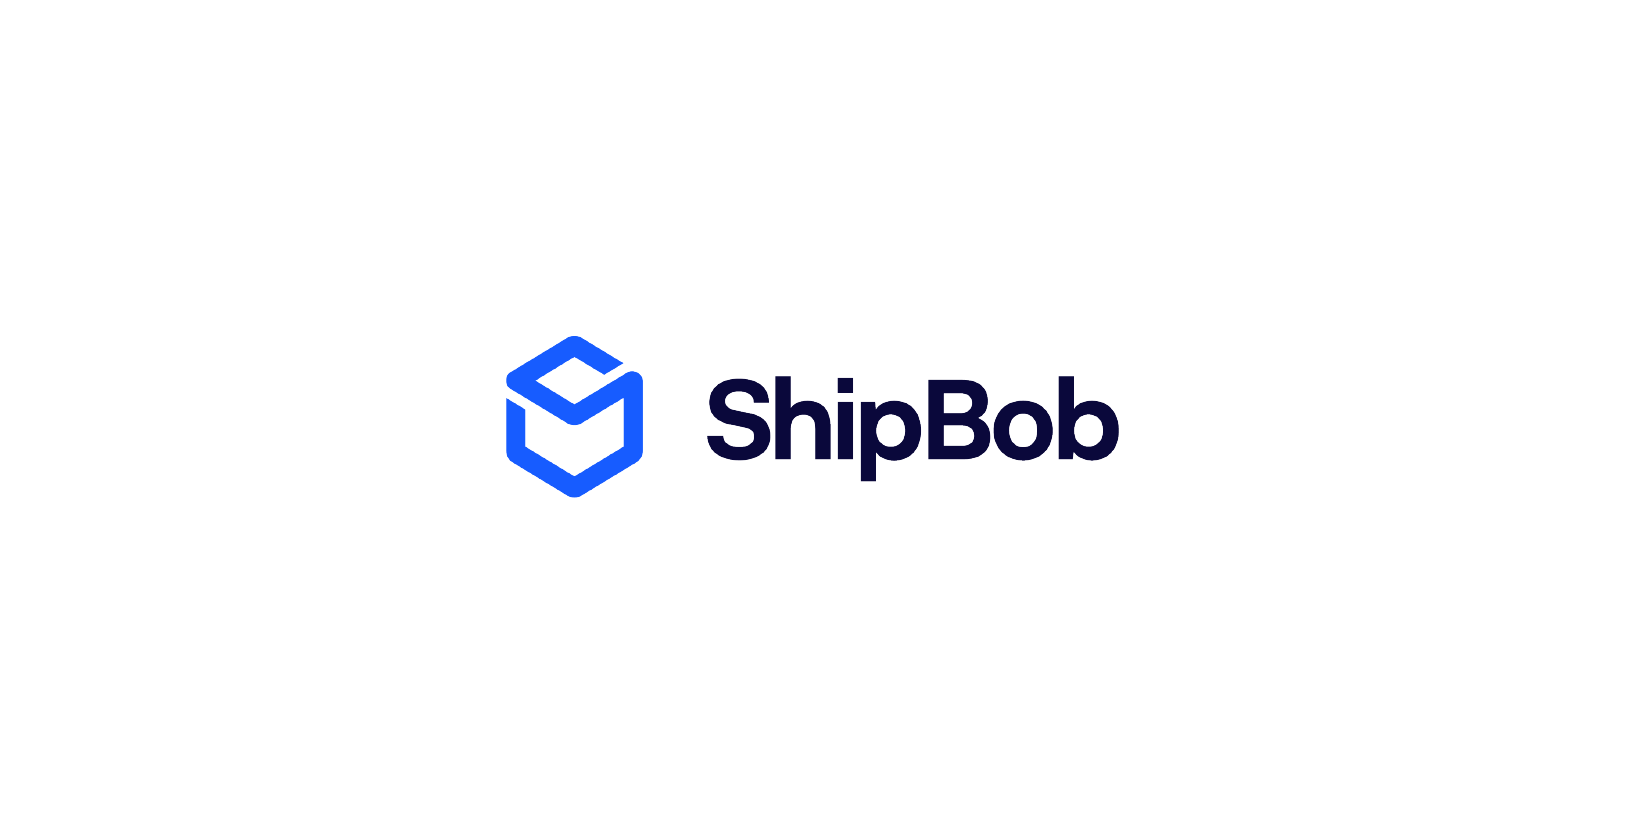 Vision Fund investment portfolio company ShipBob's logo